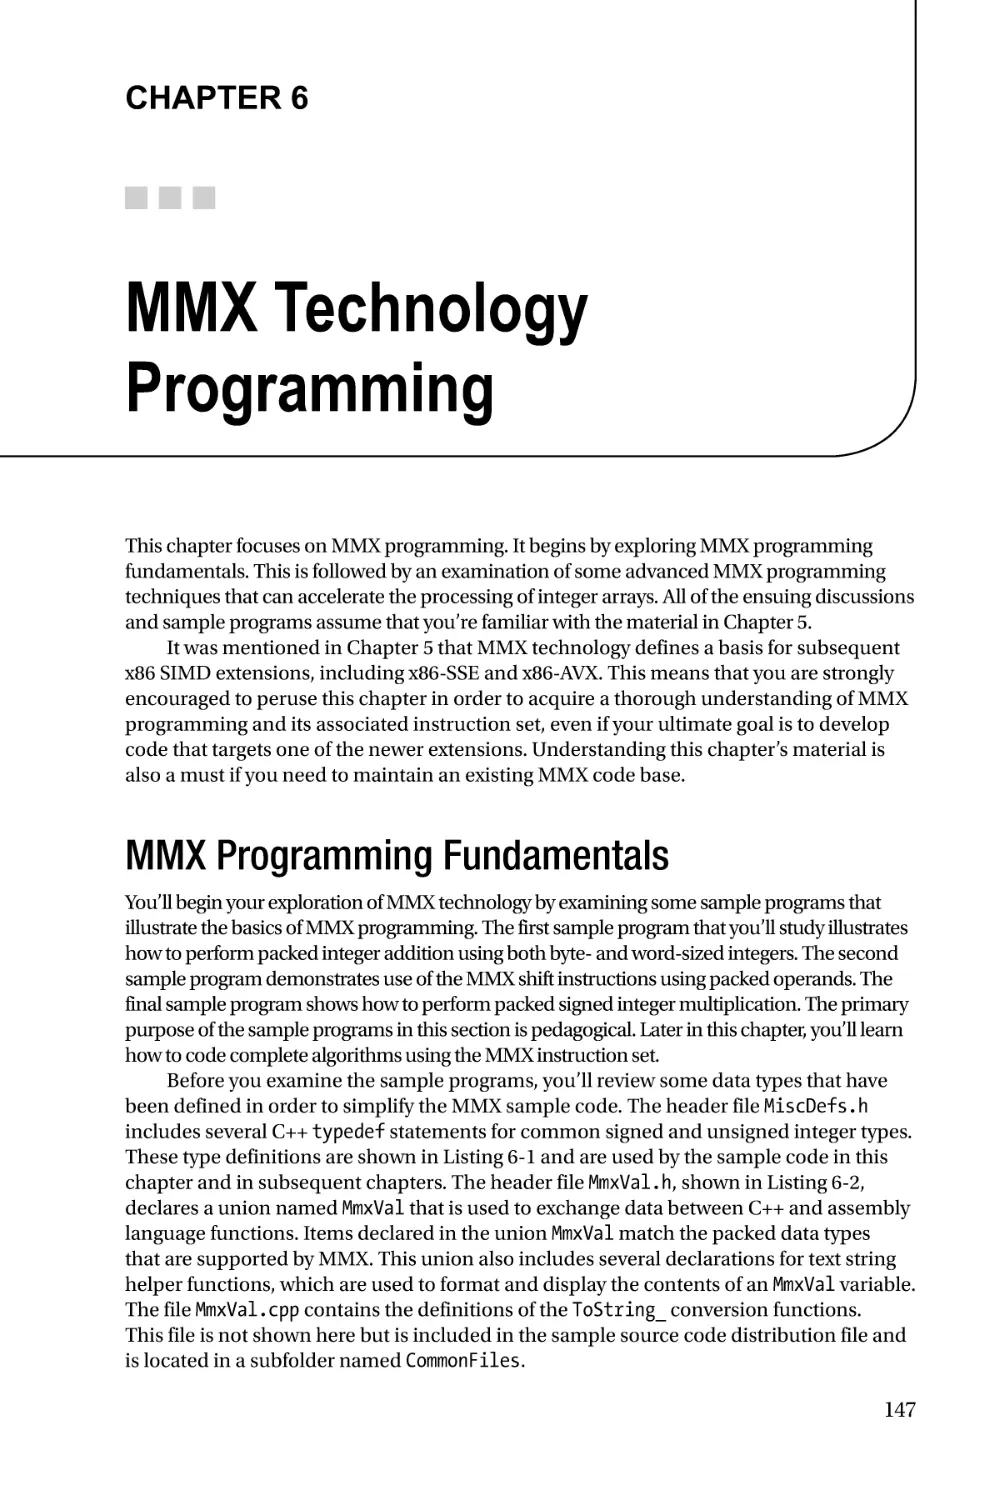 Chapter 6
MMX Programming Fundamentals